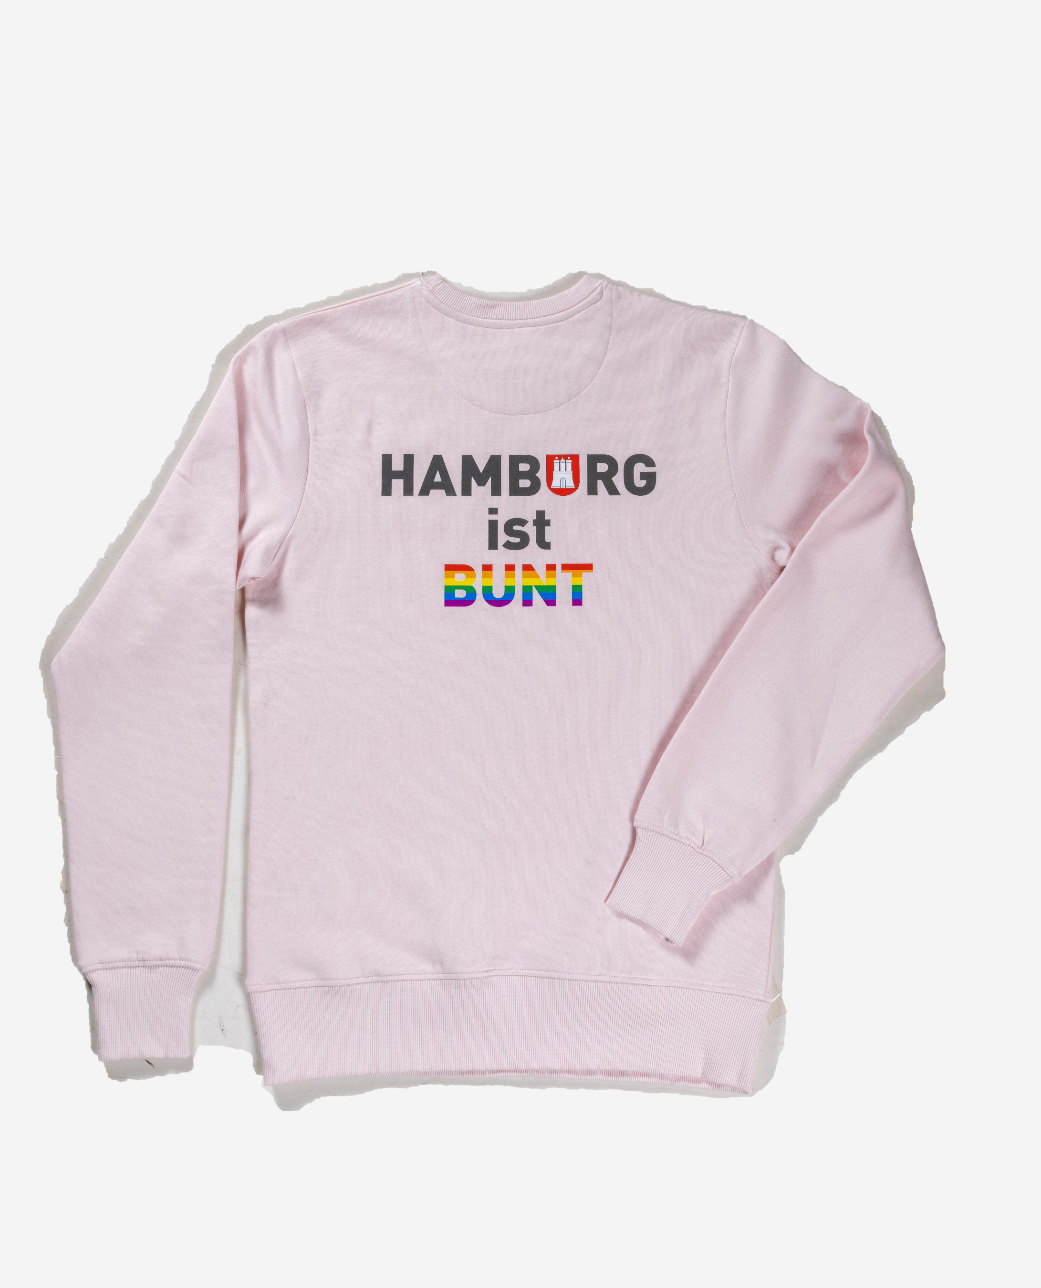 Hamburg ist Bunt - Sweater